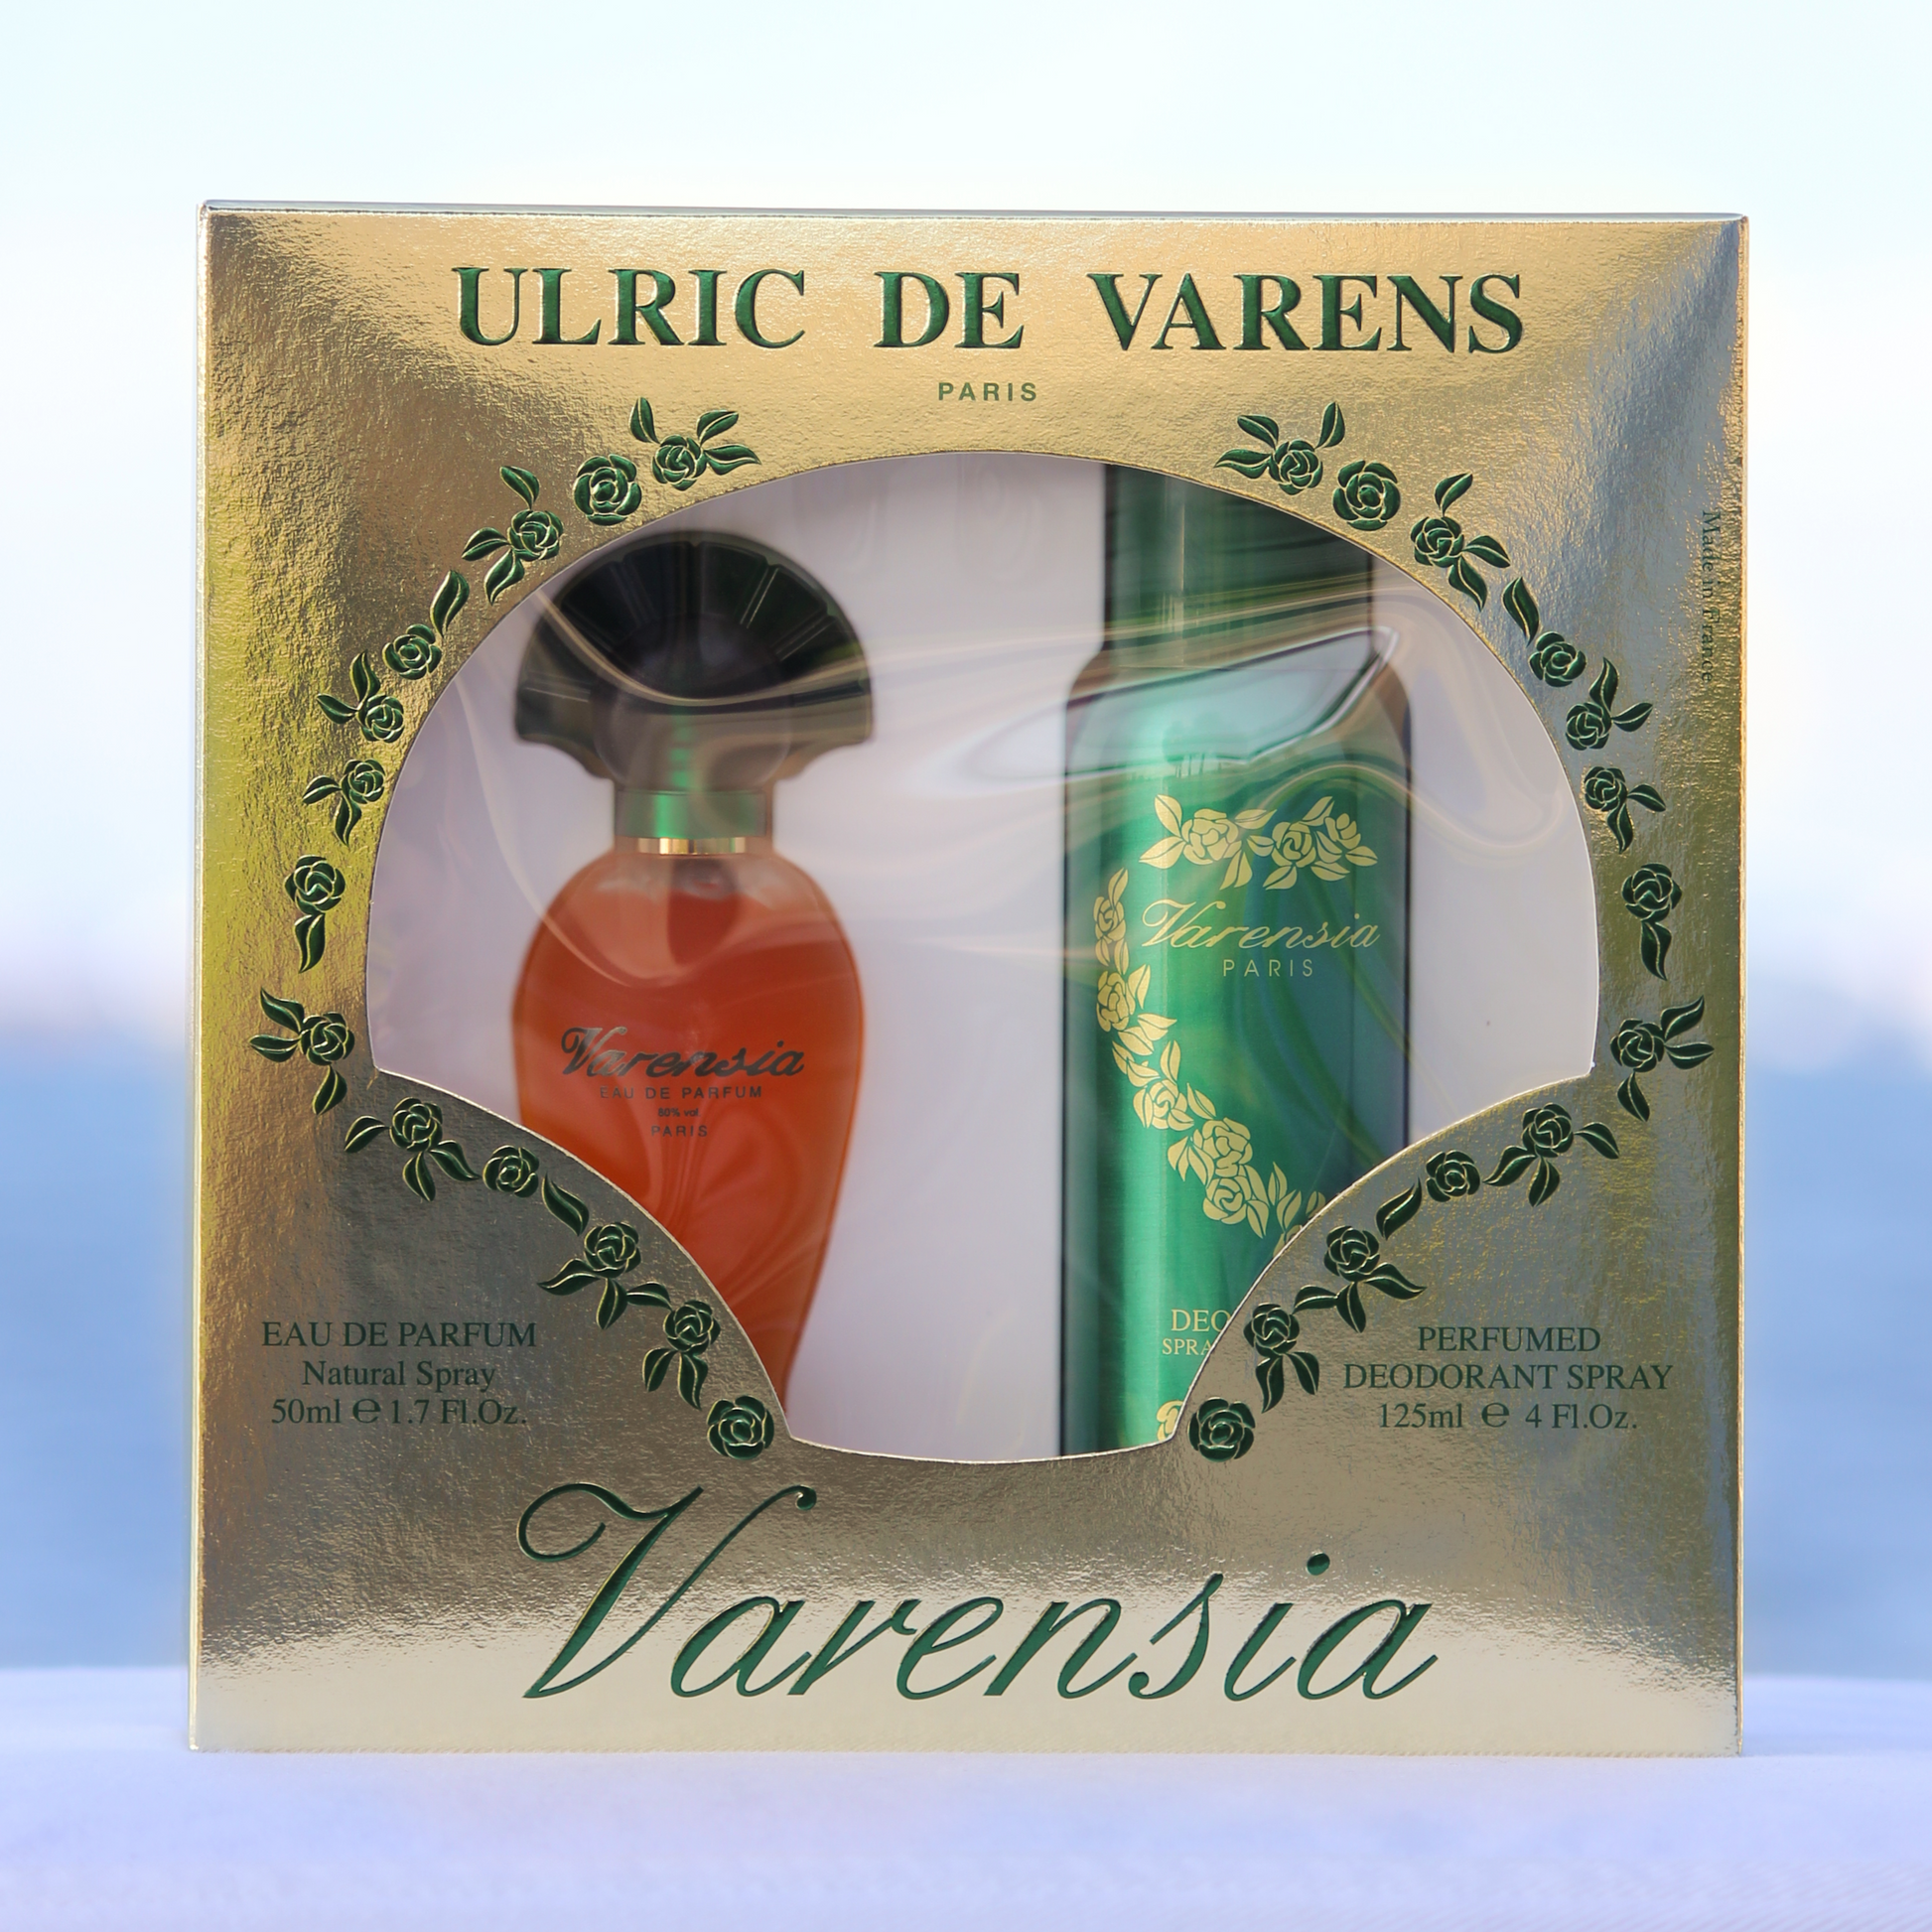 Ulric De Varens Varensia Gift Set women's perfume 1.7 EDP and deodorant 4 oz in front of beach